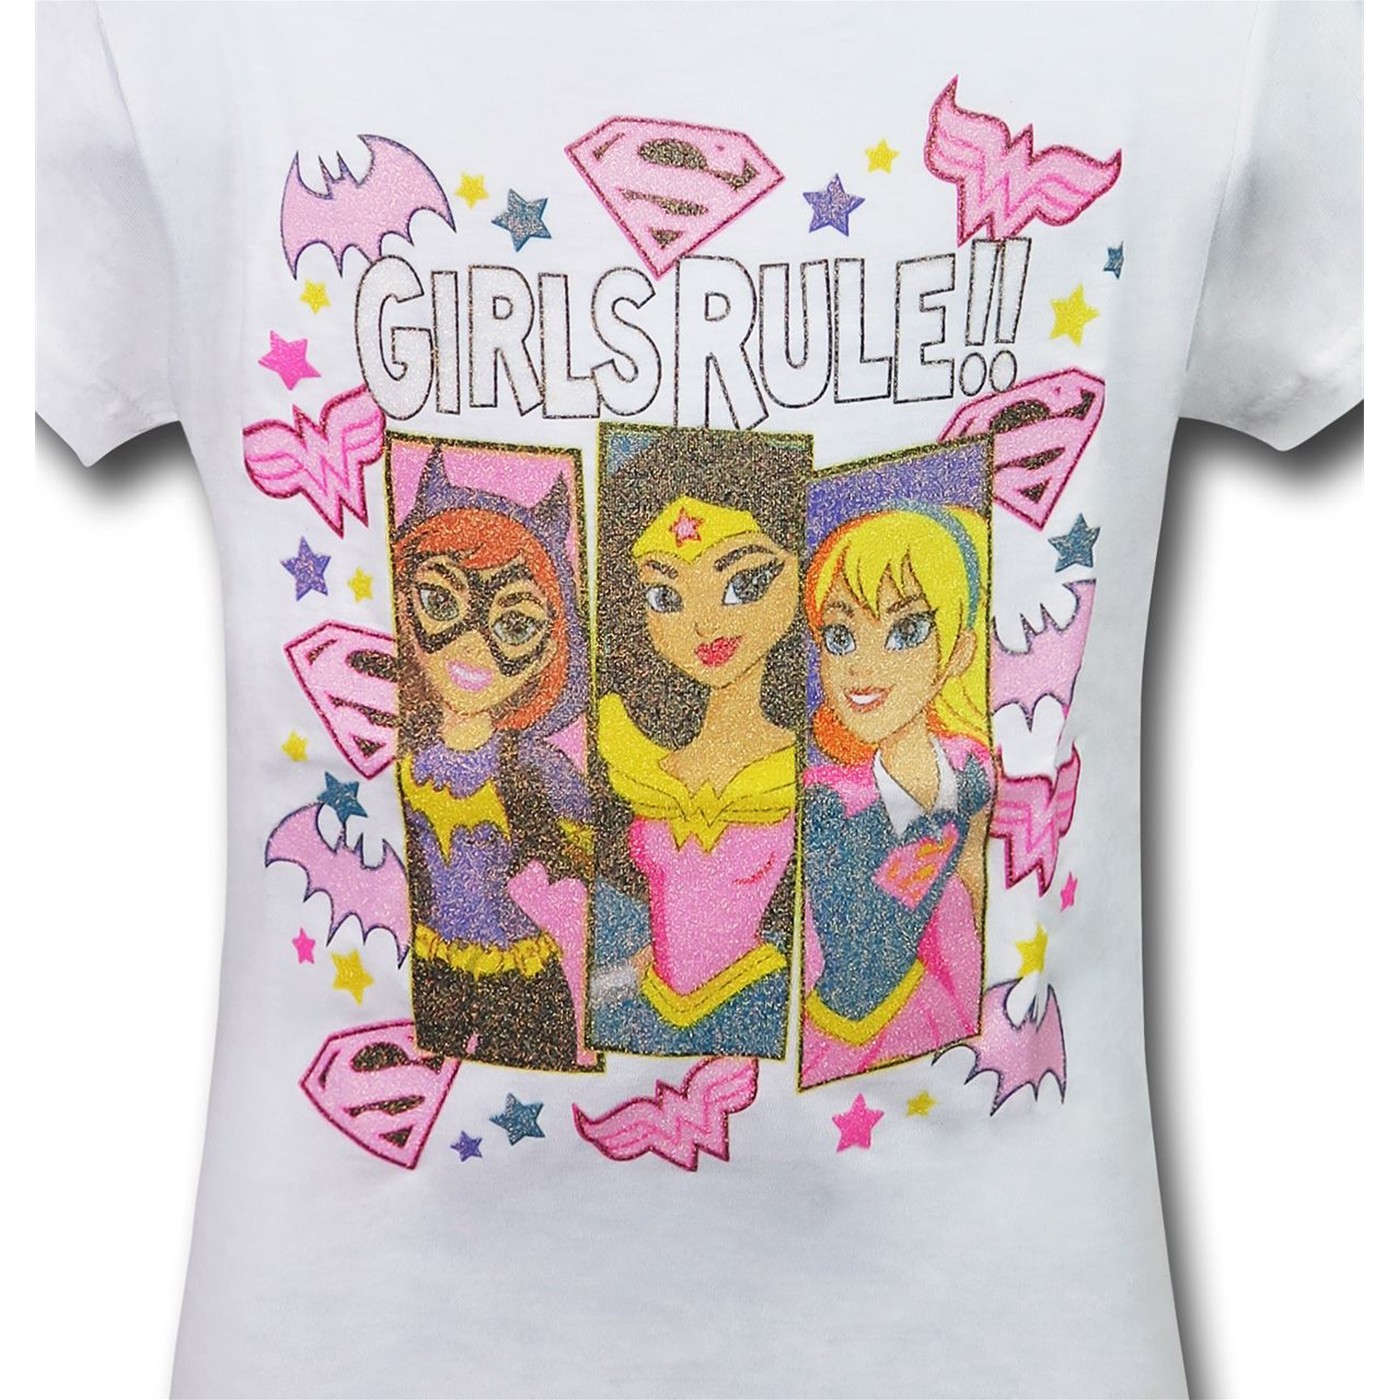 DC Comics Girls Rule Sugar Glitter Girls T-Shirt